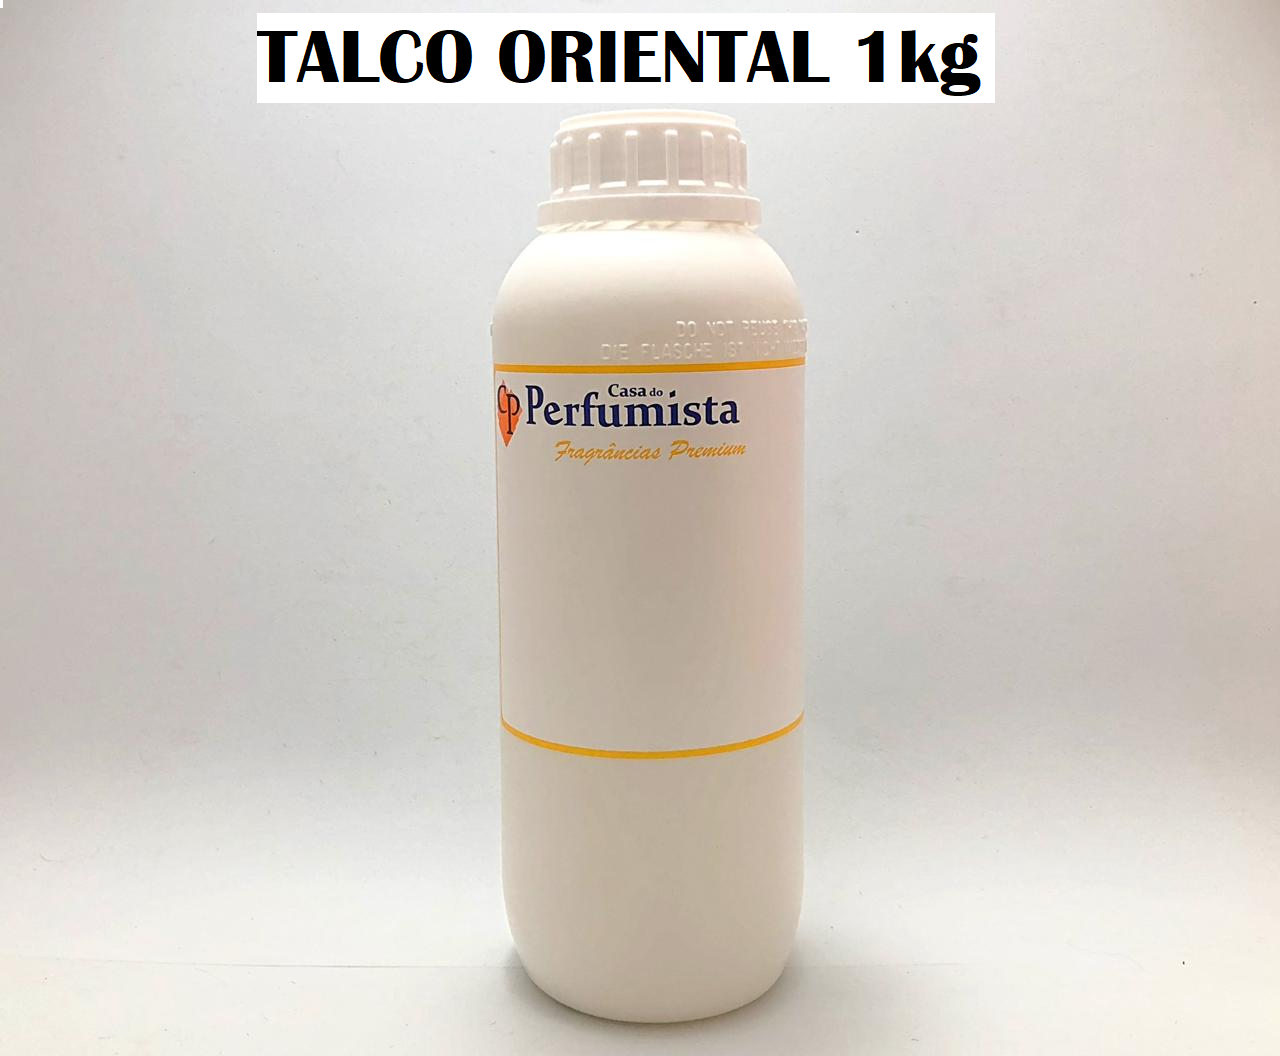 TALCO ORIENTAL - 1kg